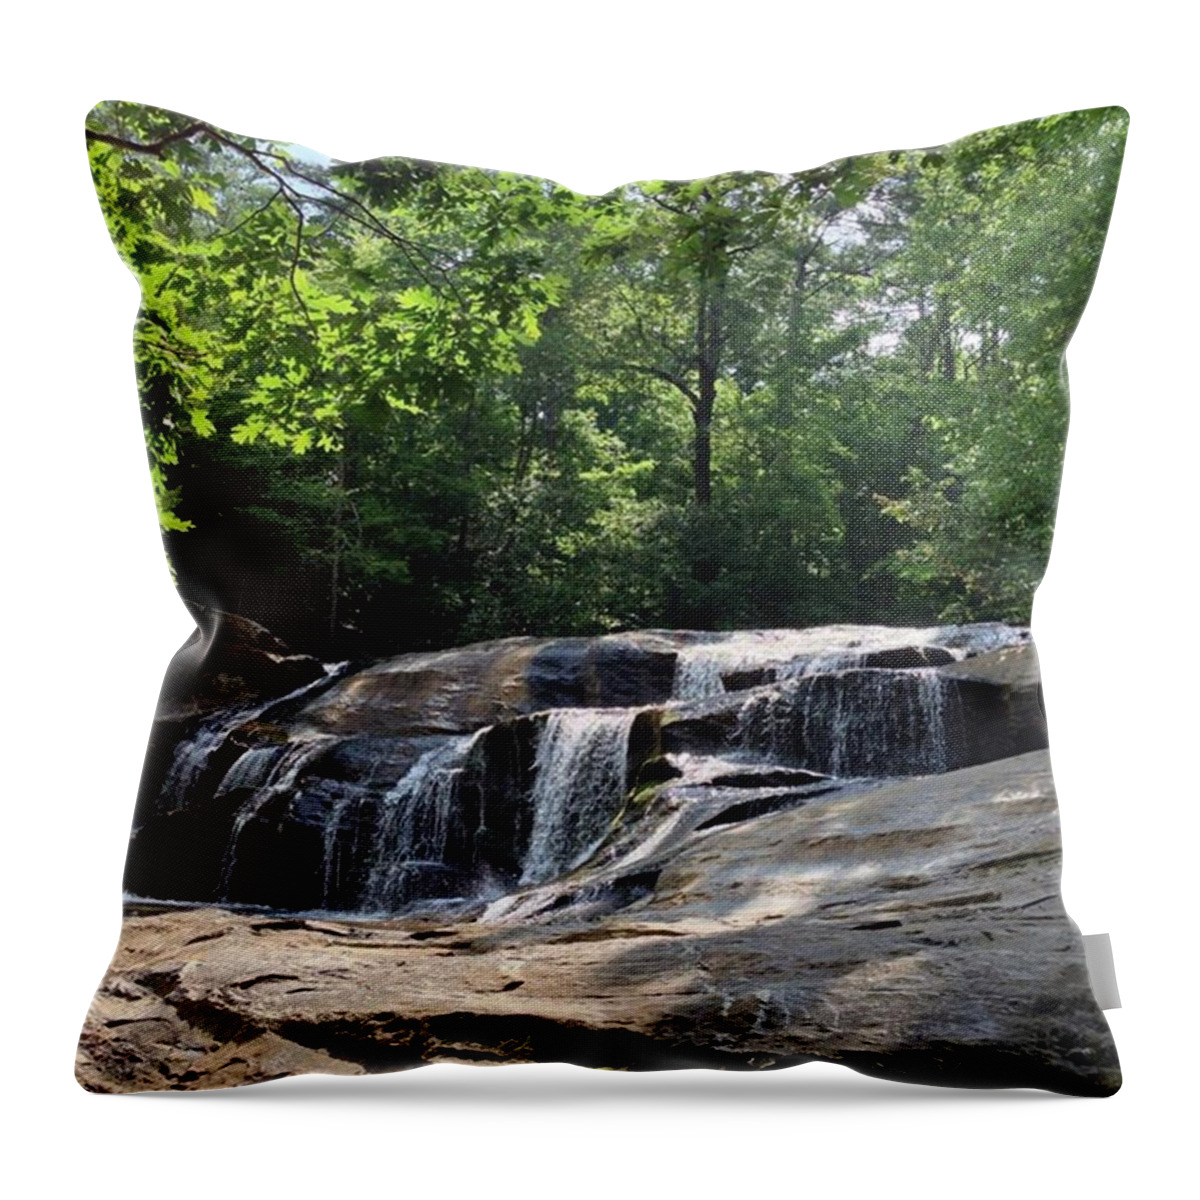  Throw Pillow featuring the photograph Allatoona Falls #1 by Daniel Eskridge